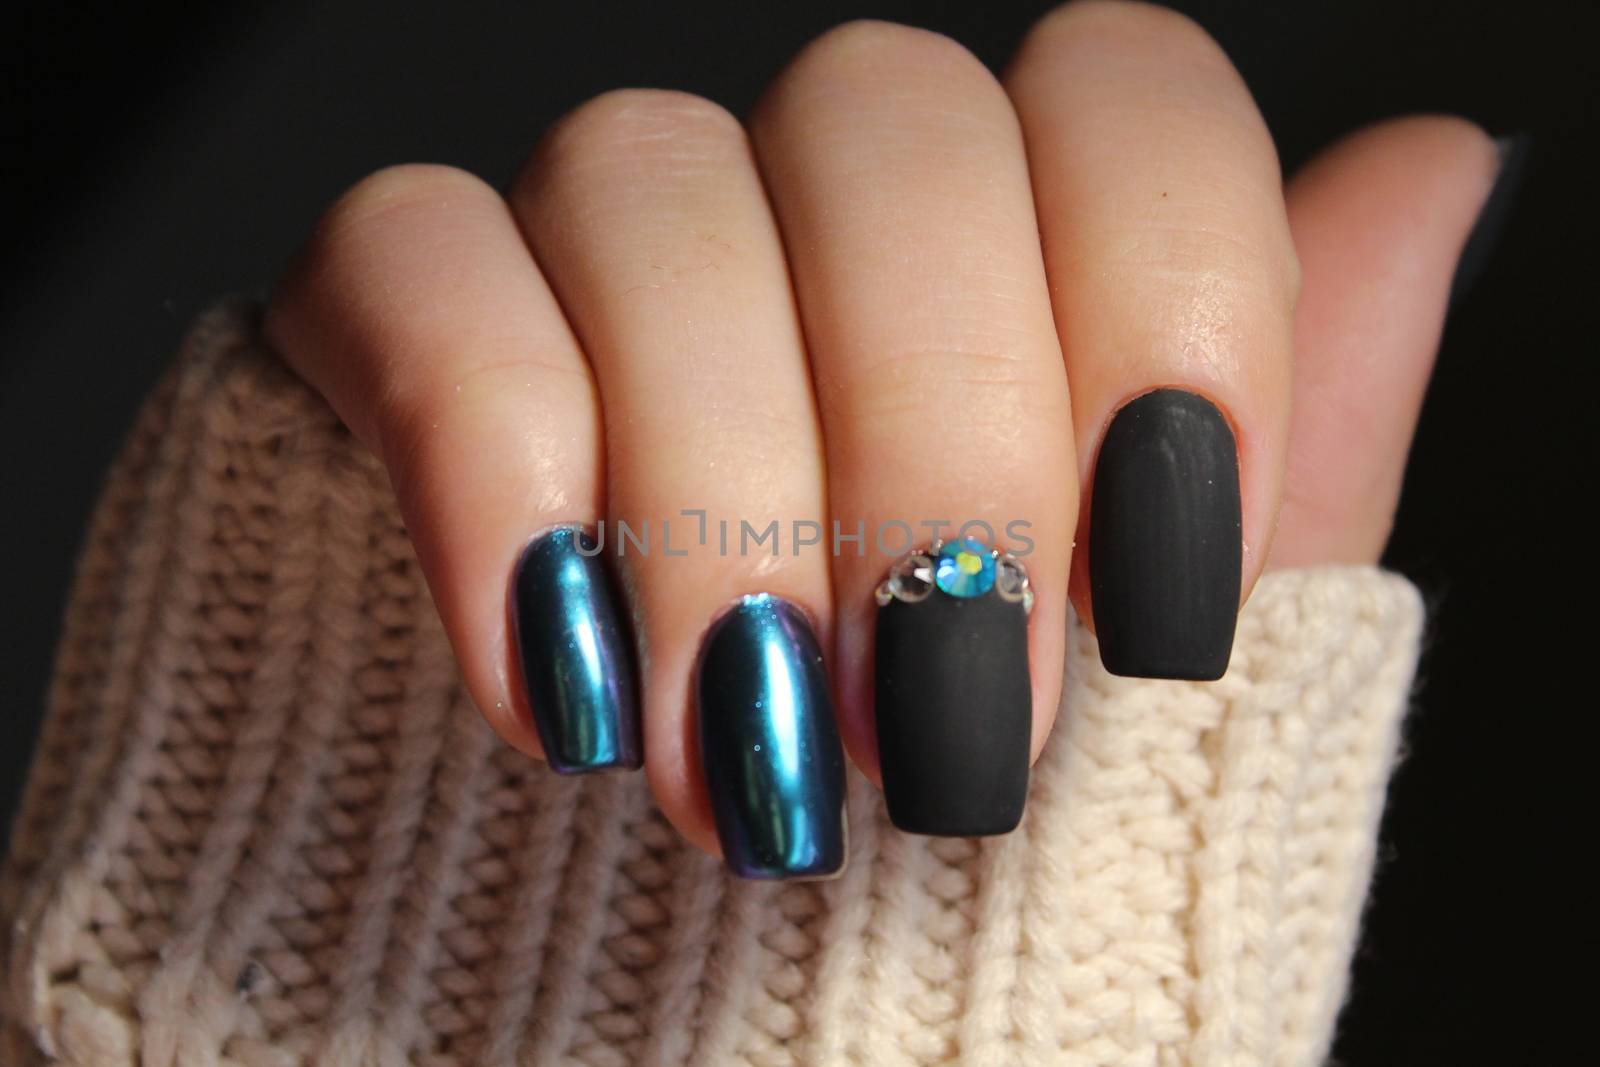 Manicured nails Nail Polish art design. by SmirMaxStock